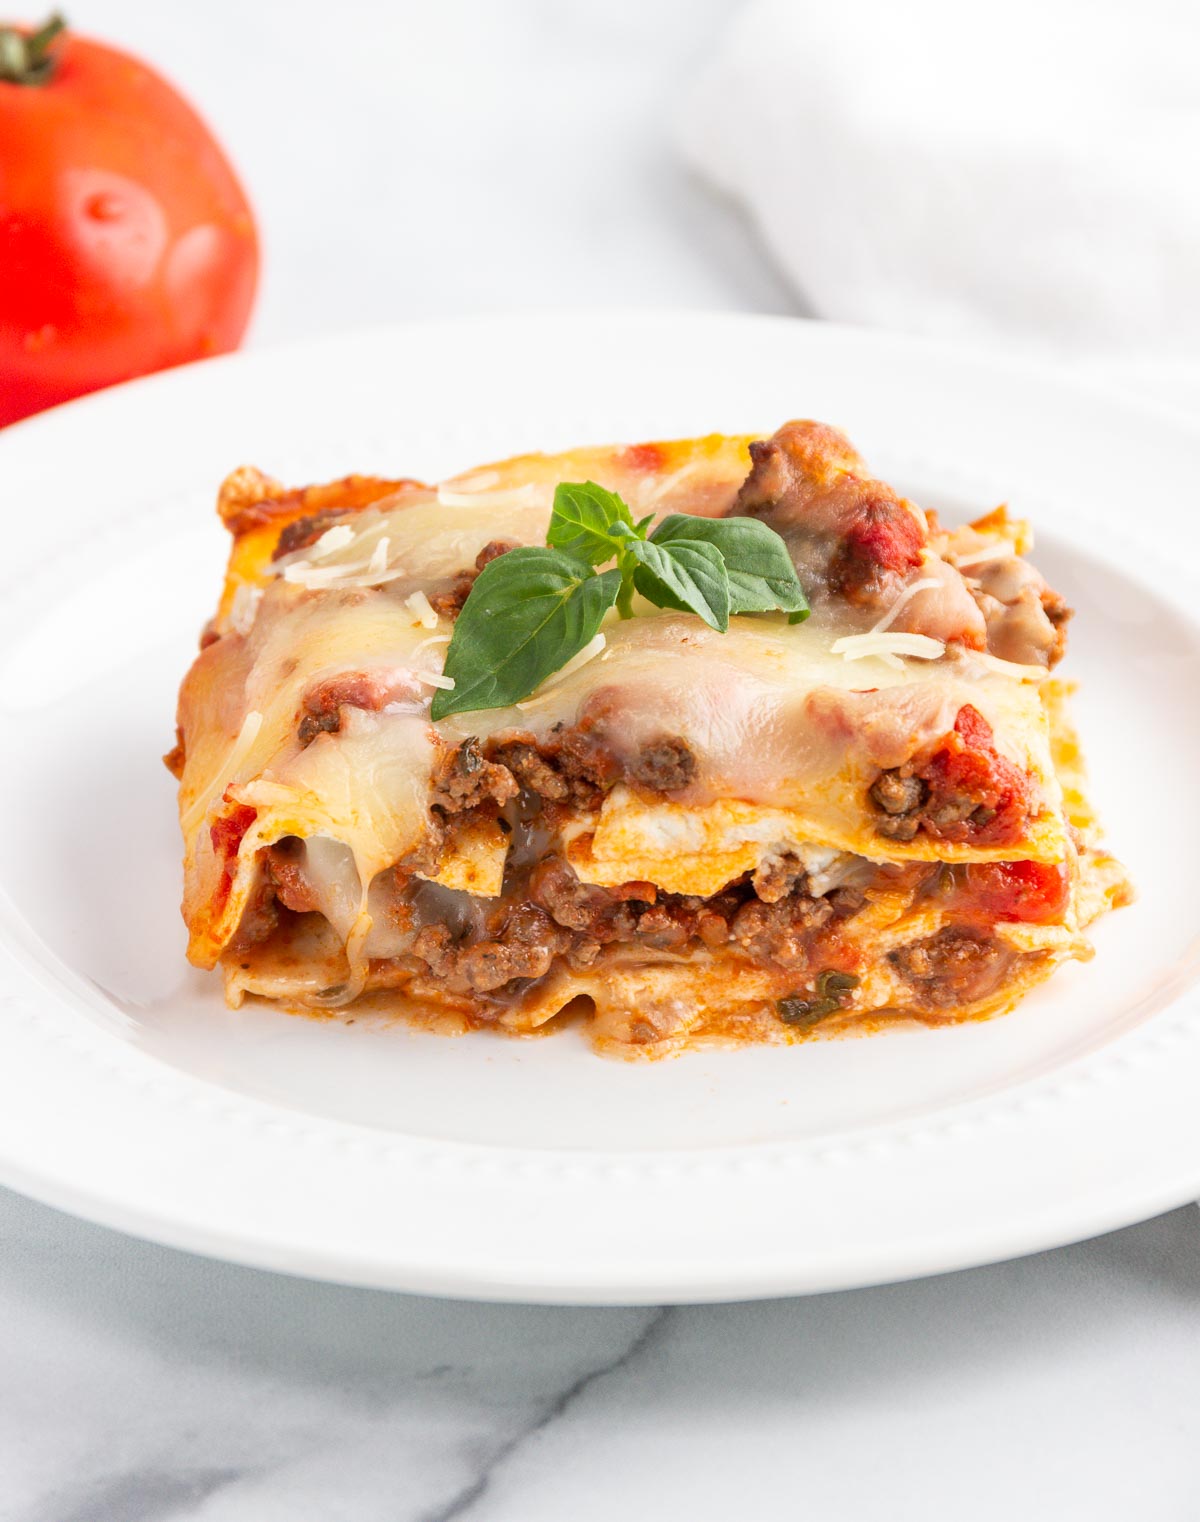 A plated serving of keto lasagna.